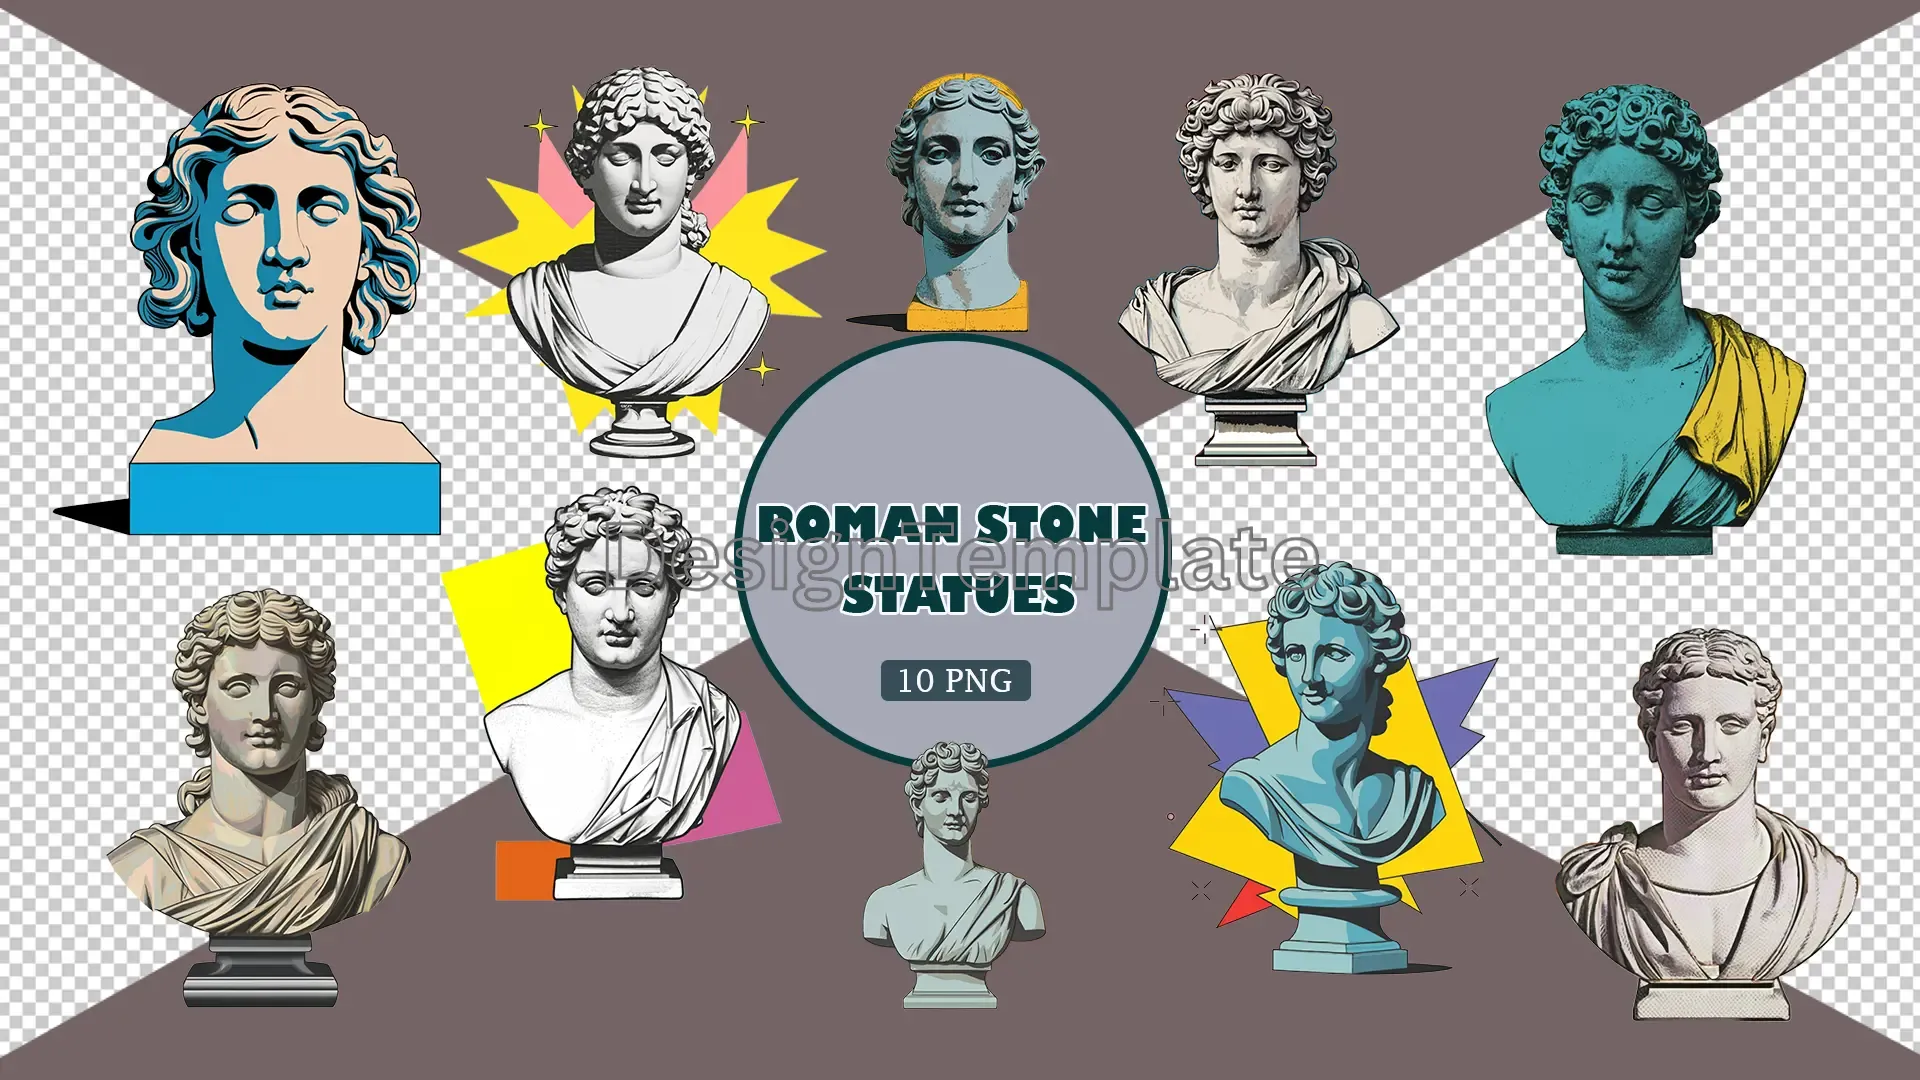 Classical Roman Stone Statues 3D Elements Pack image